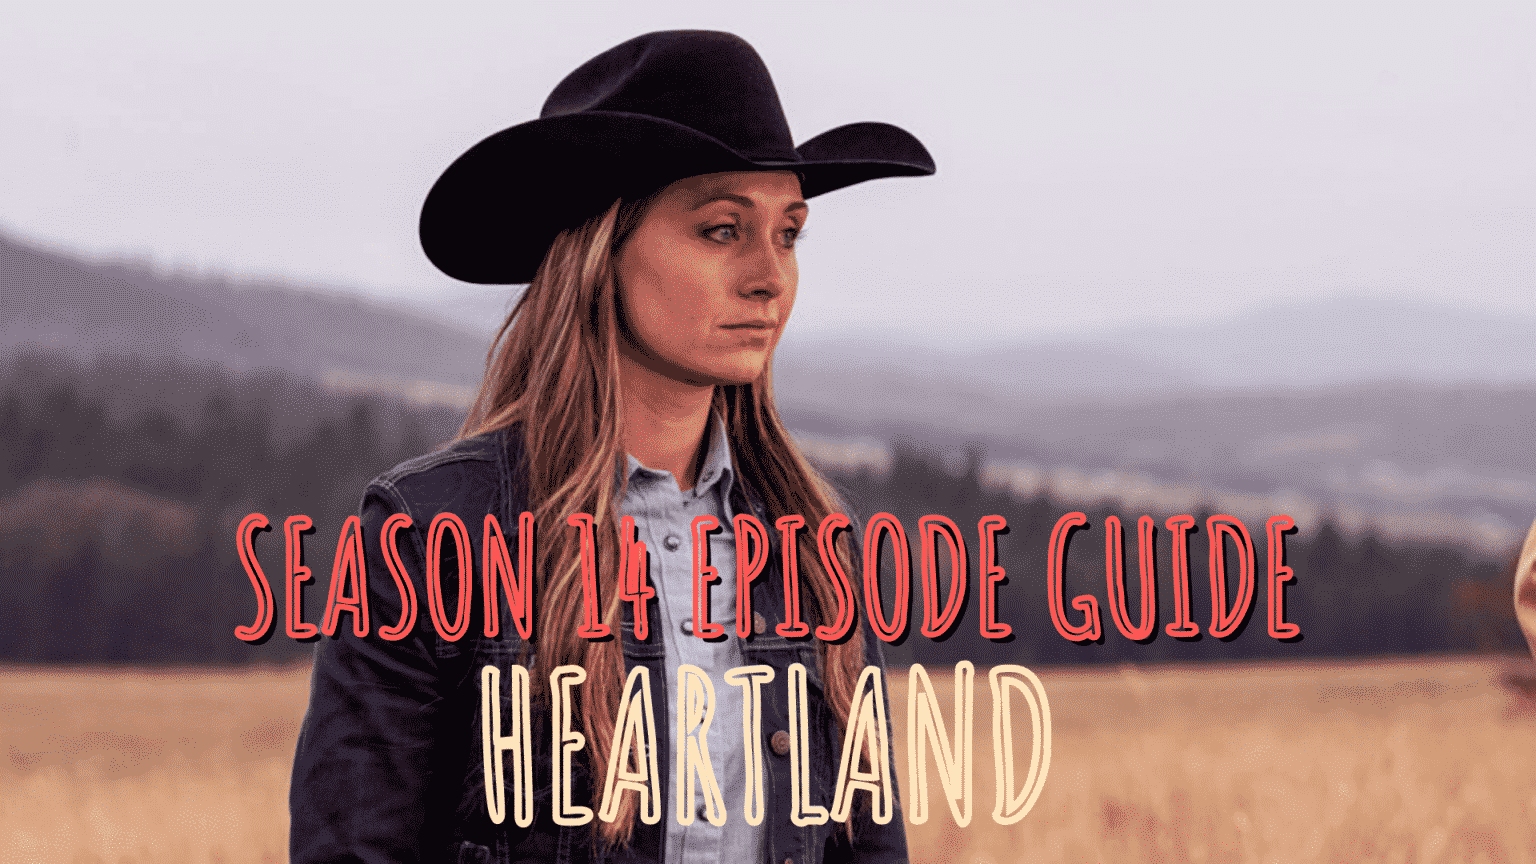 heartland season 14 episode 1 ty death